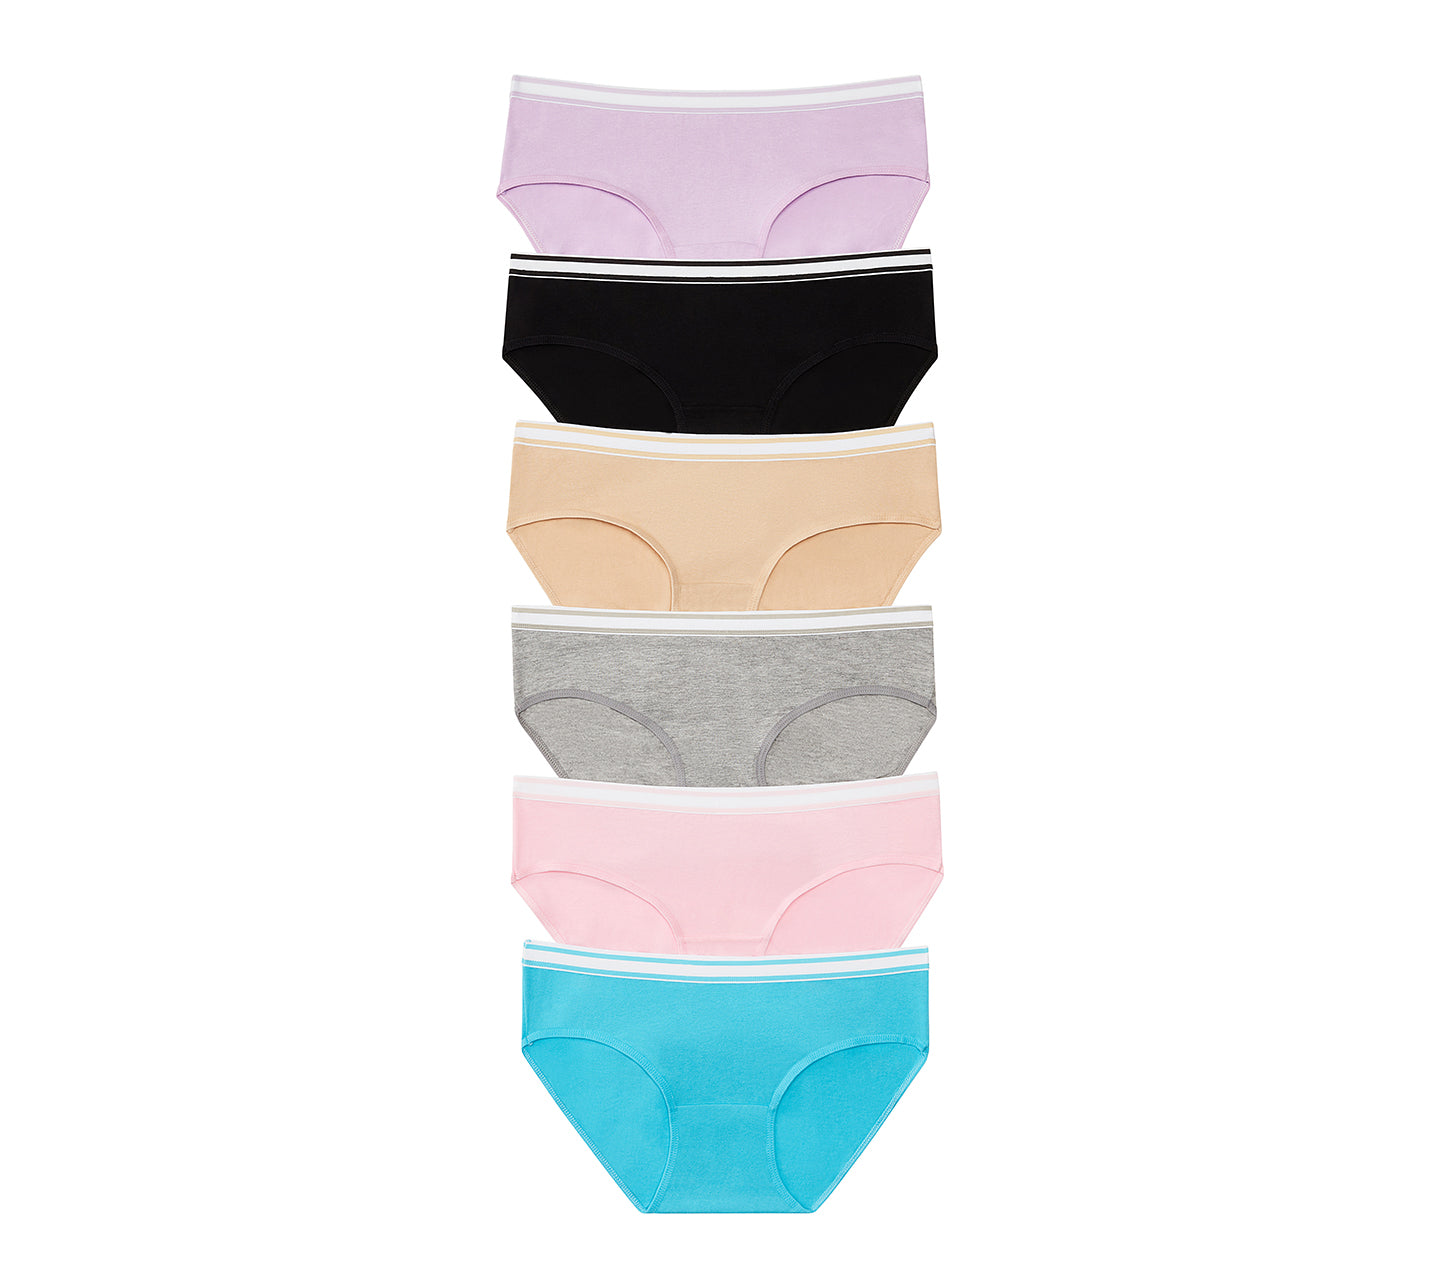 Nabtos Women's Cotton Underwear Hipster Panties (Pack of 6)